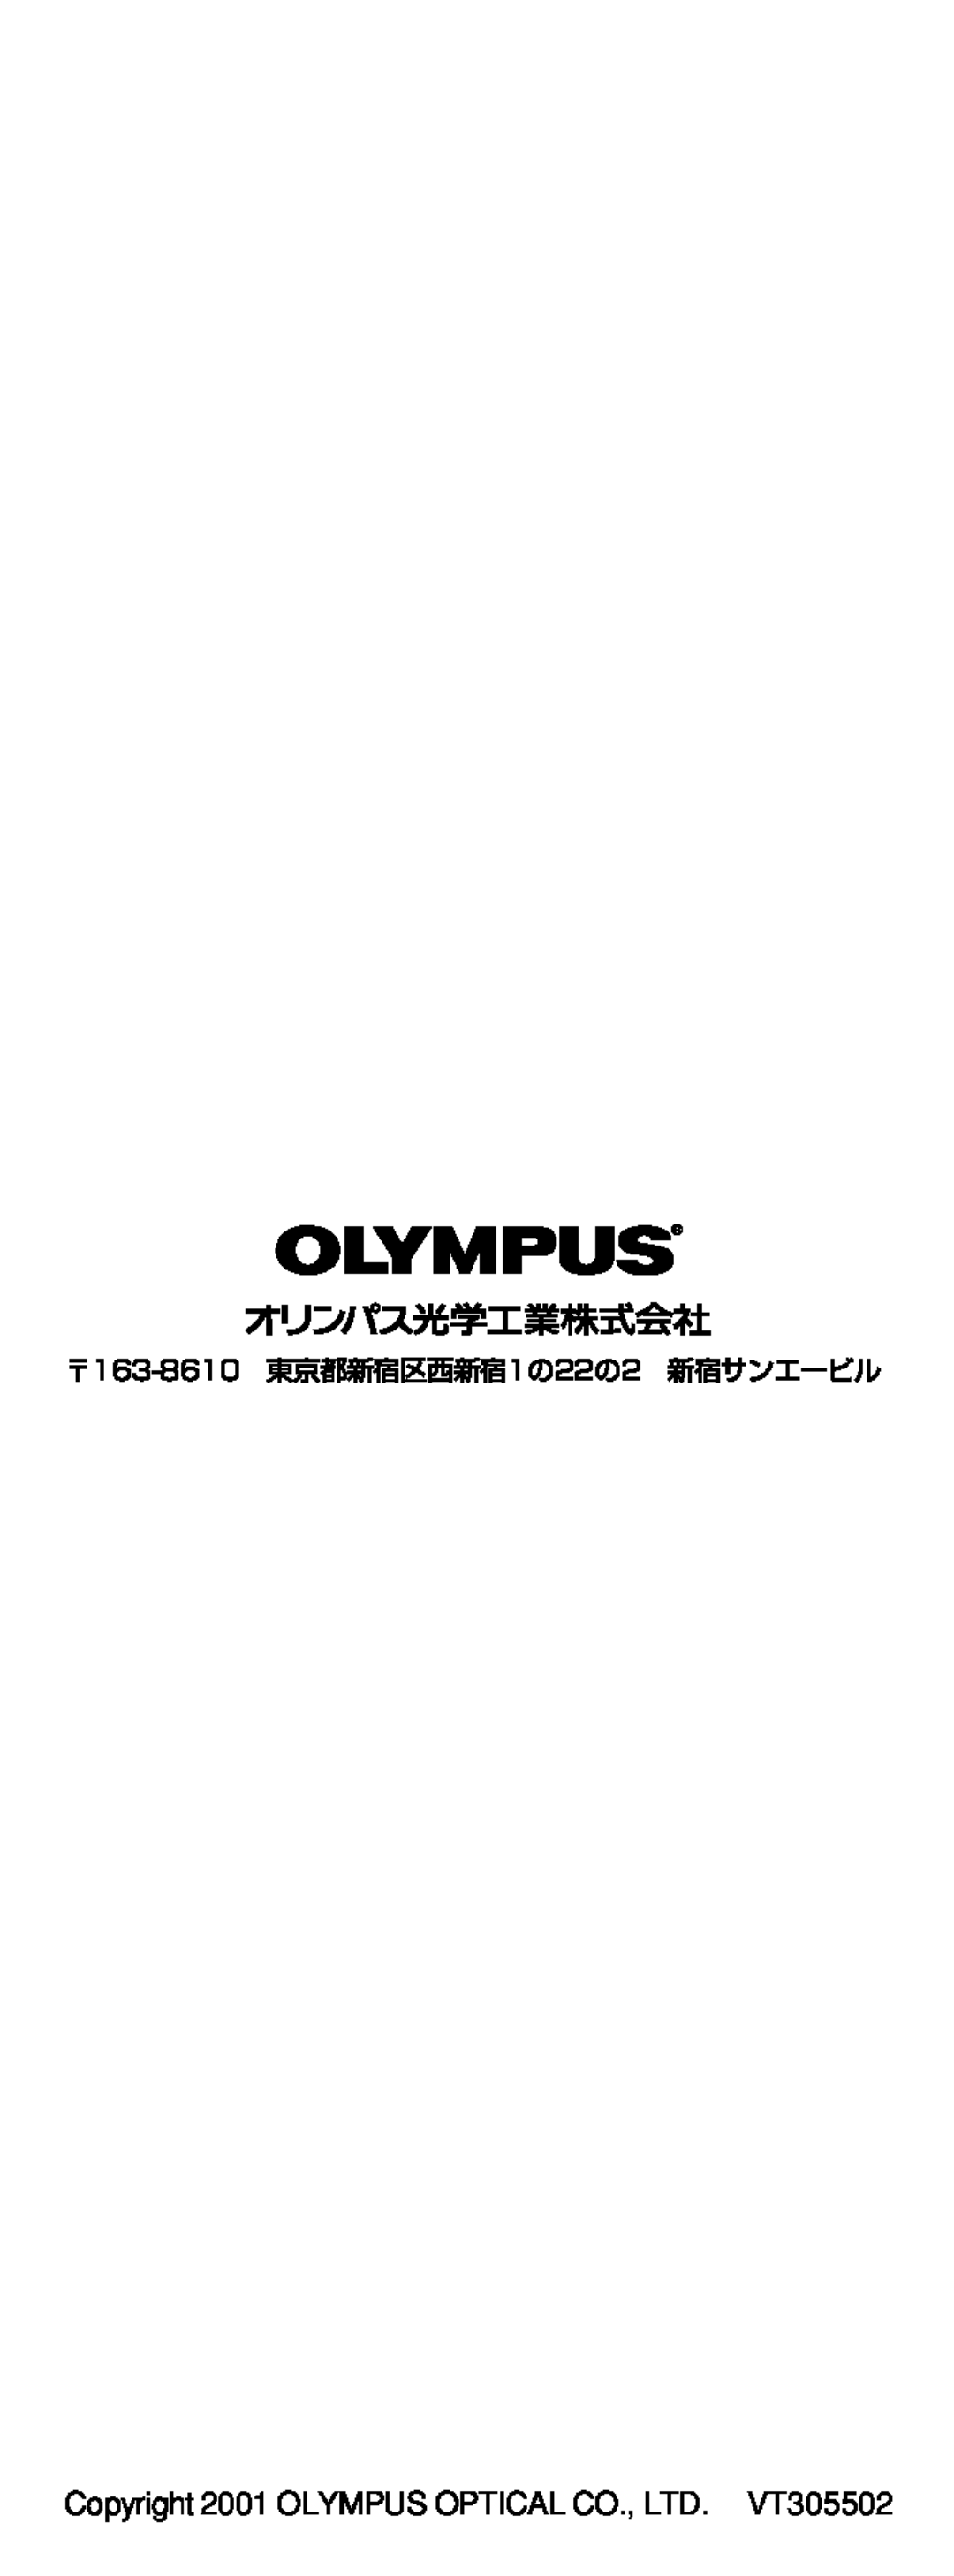 Olympus B-20 LPC instruction manual 163-8610 東京都新宿区西新宿1の22の2 新宿サンエービル 